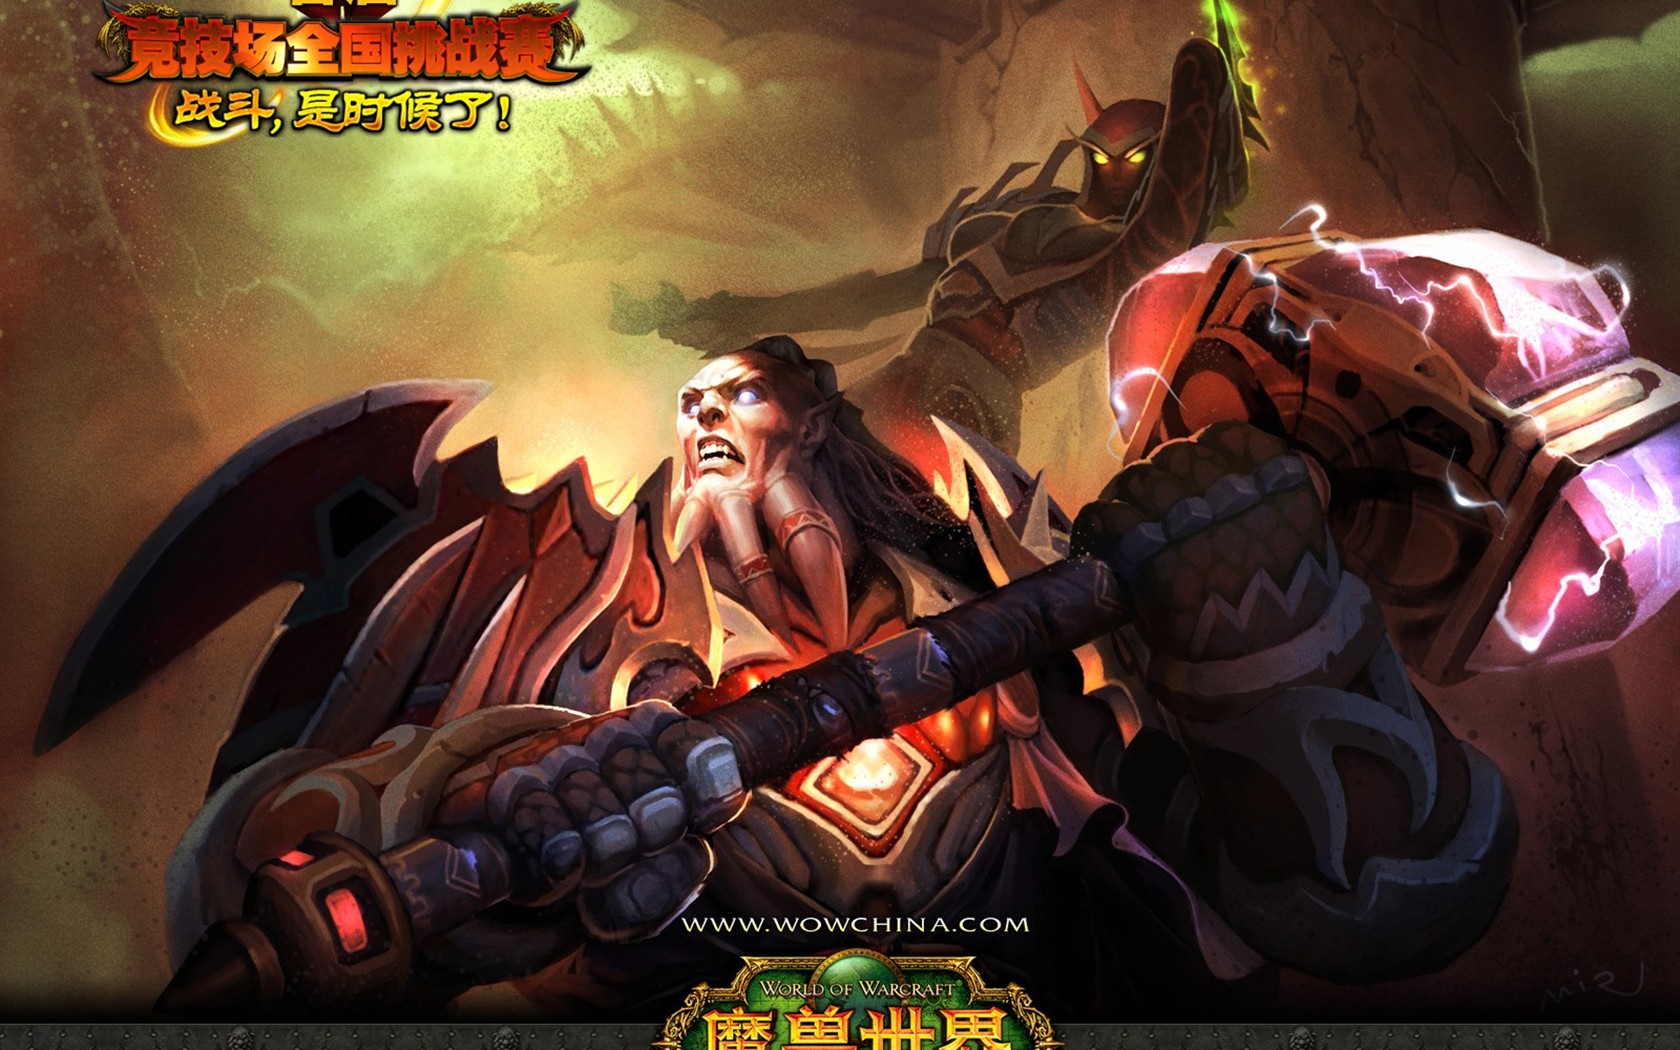 World of Warcraft: fondo de pantalla oficial de The Burning Crusade (2) #4 - 1680x1050